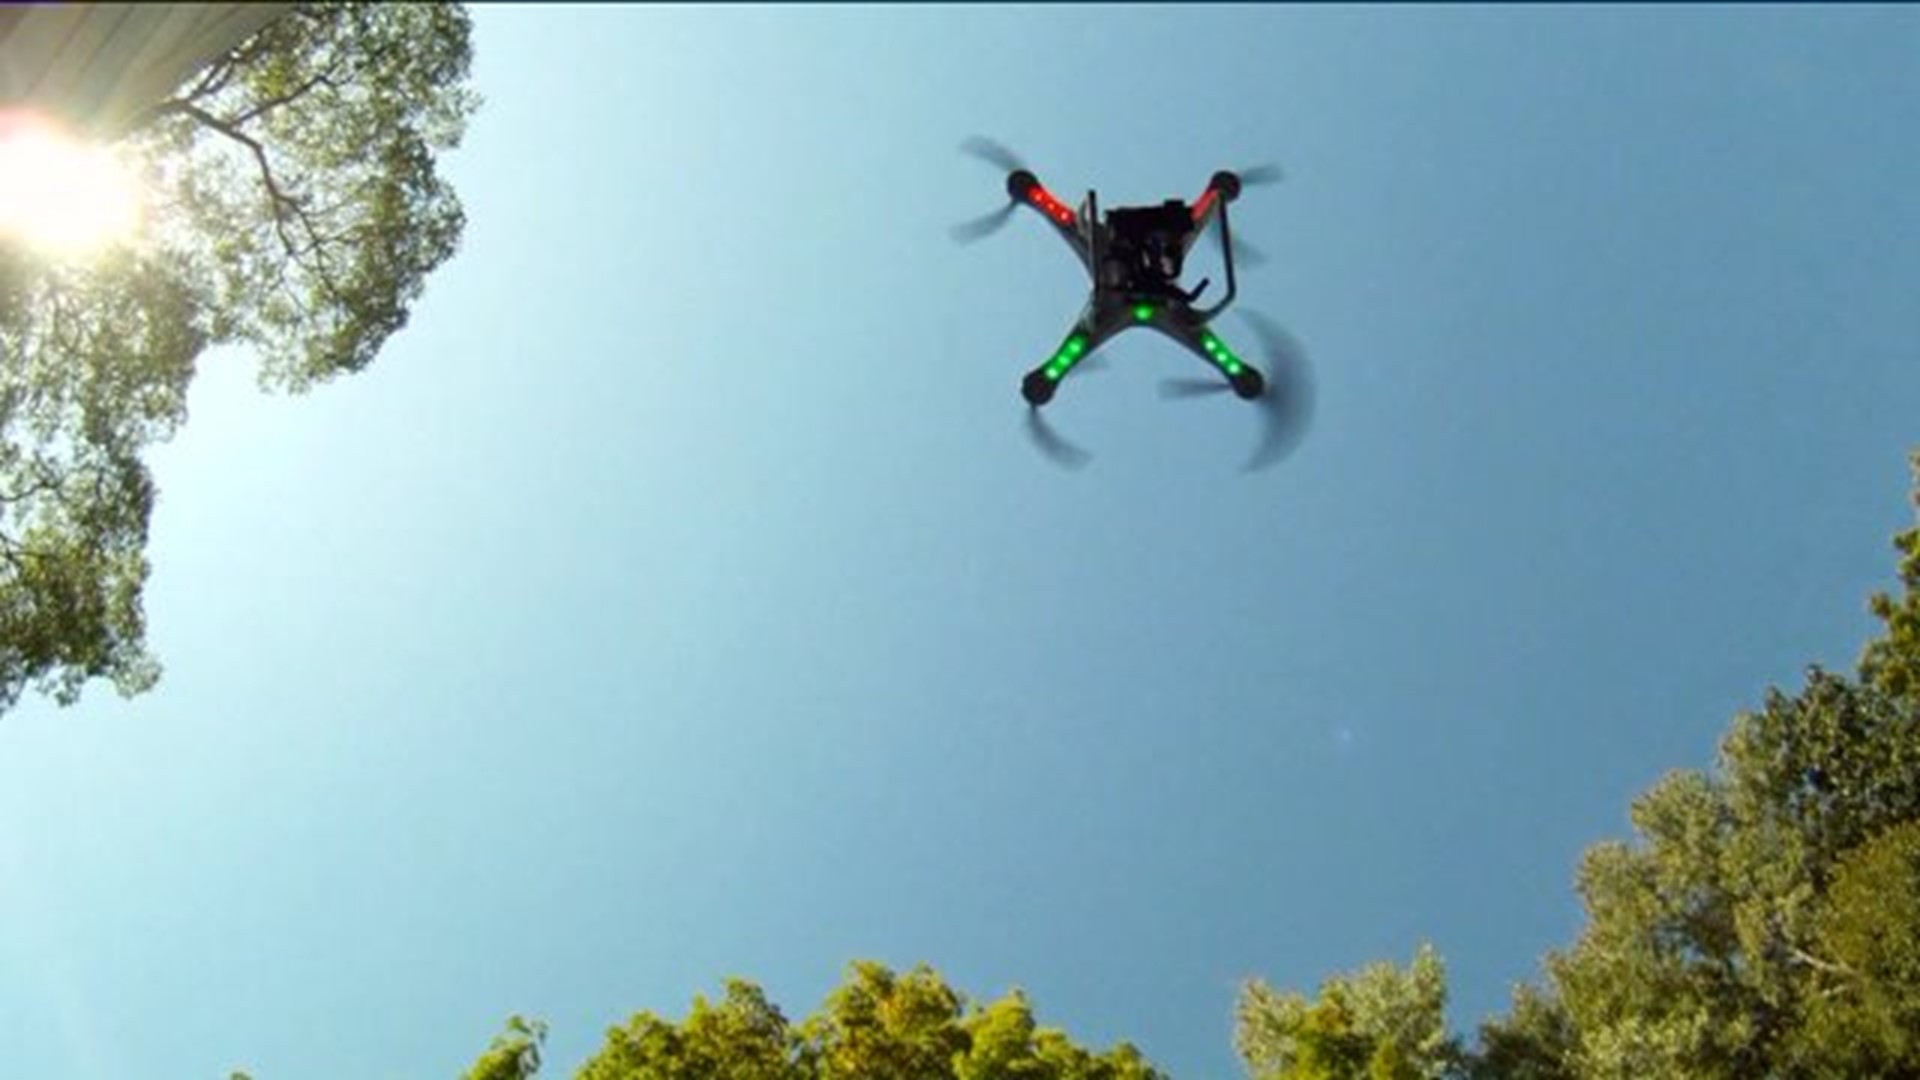 Should police agencies be able to utilize drones?